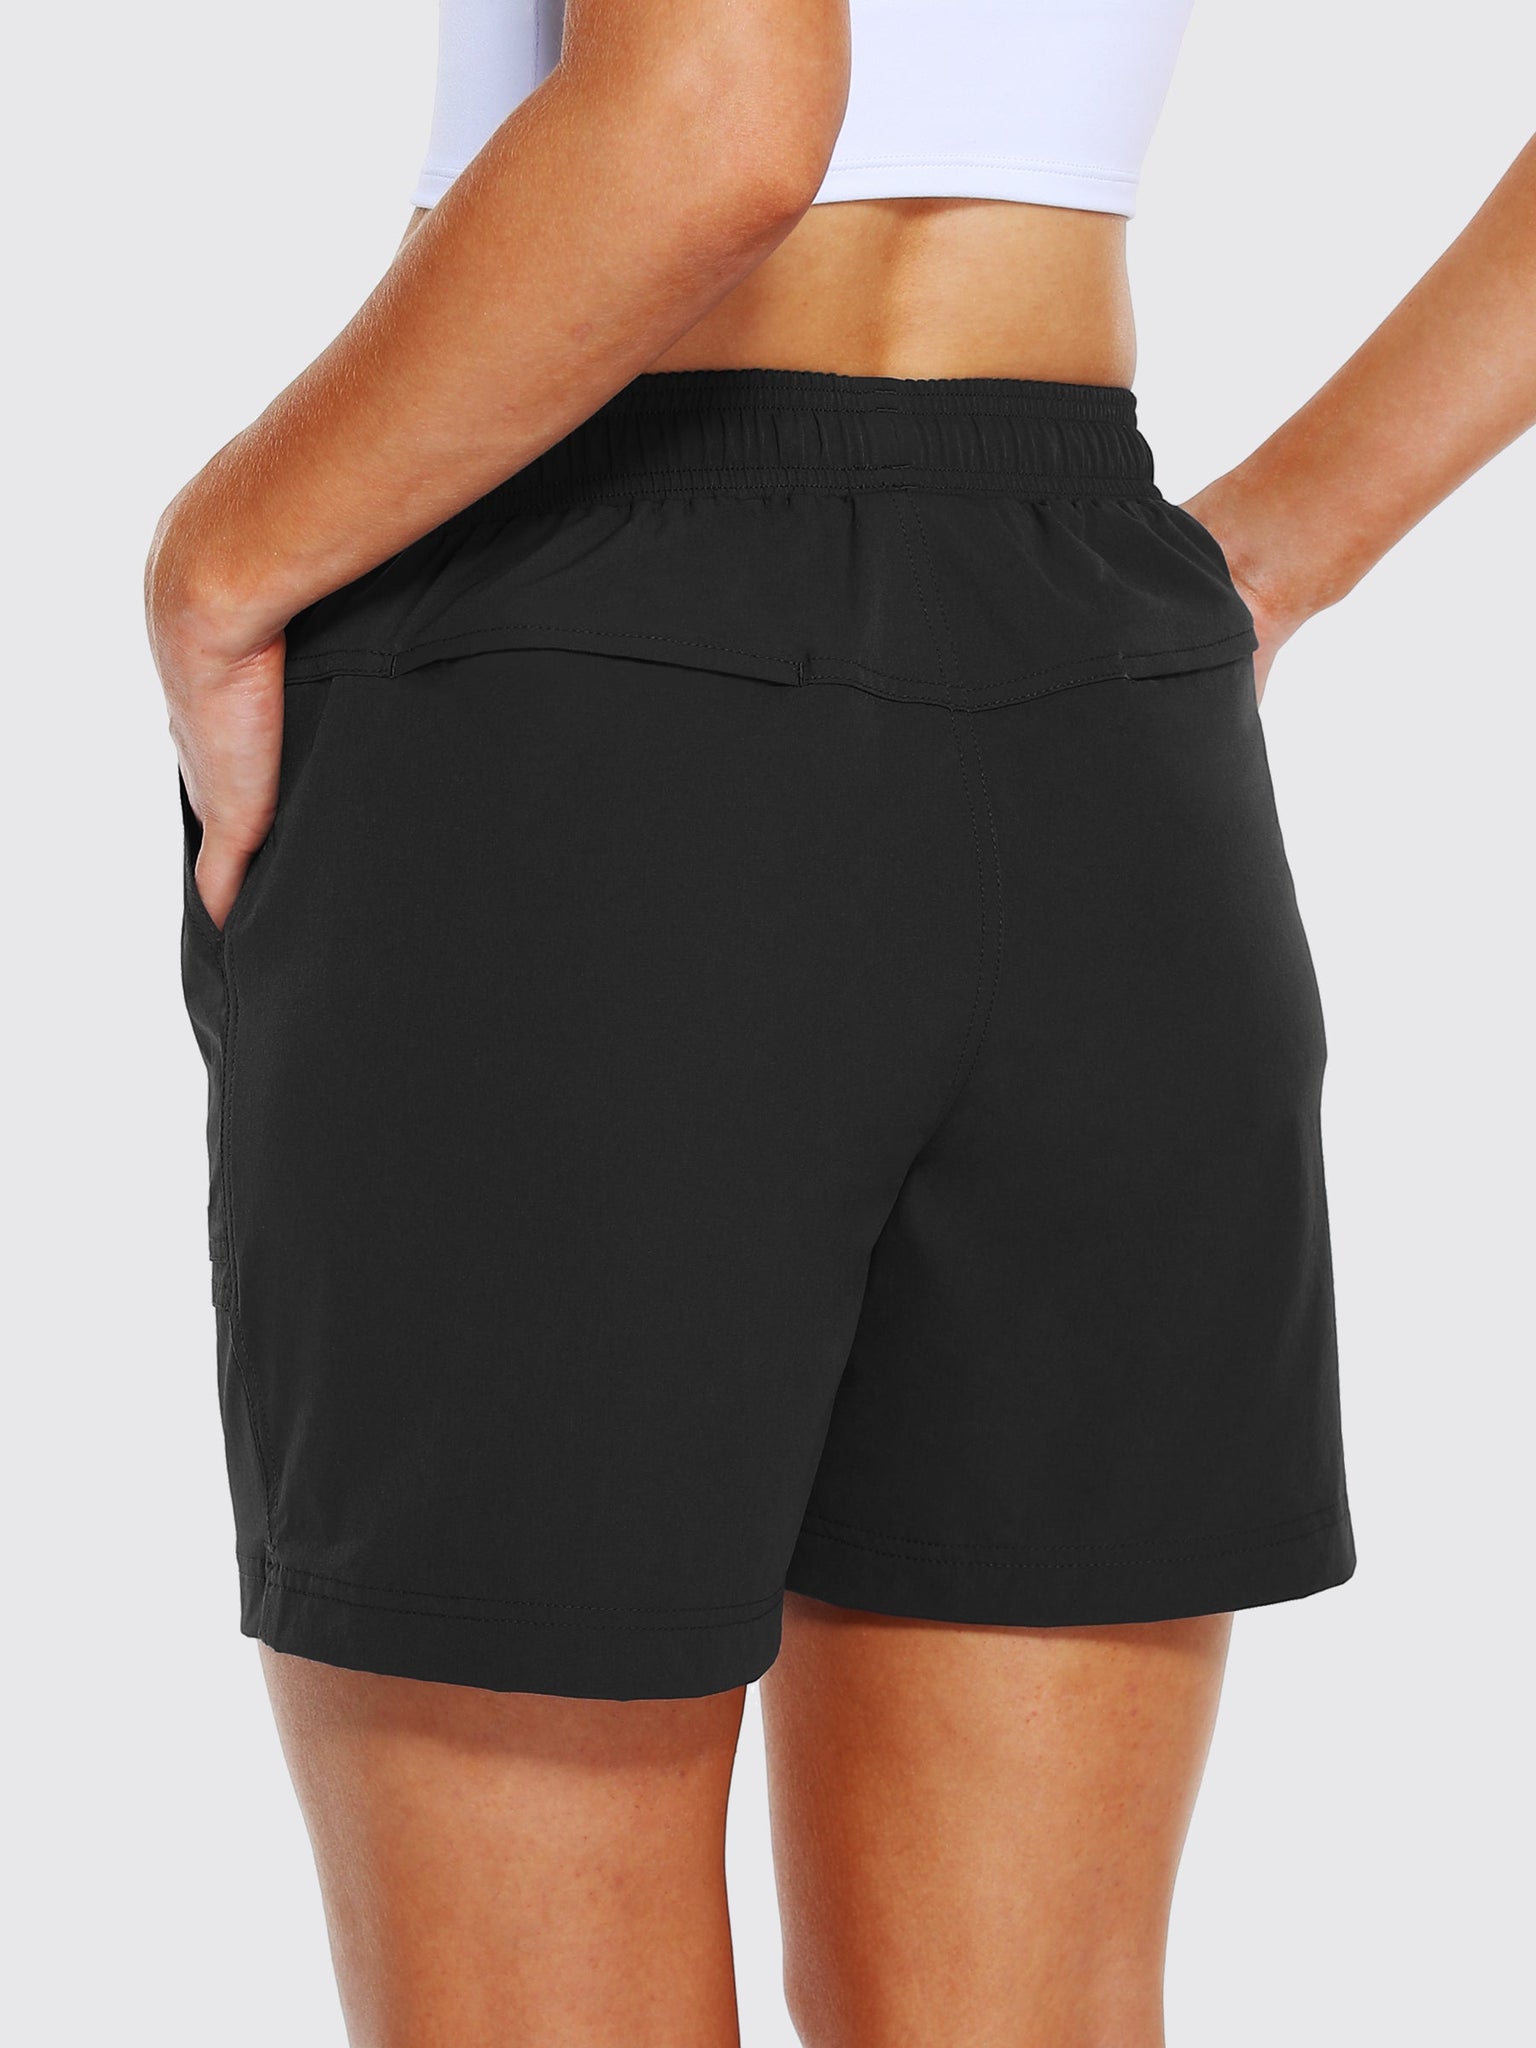 Willit Women's Hiking Golf Shorts_Black3